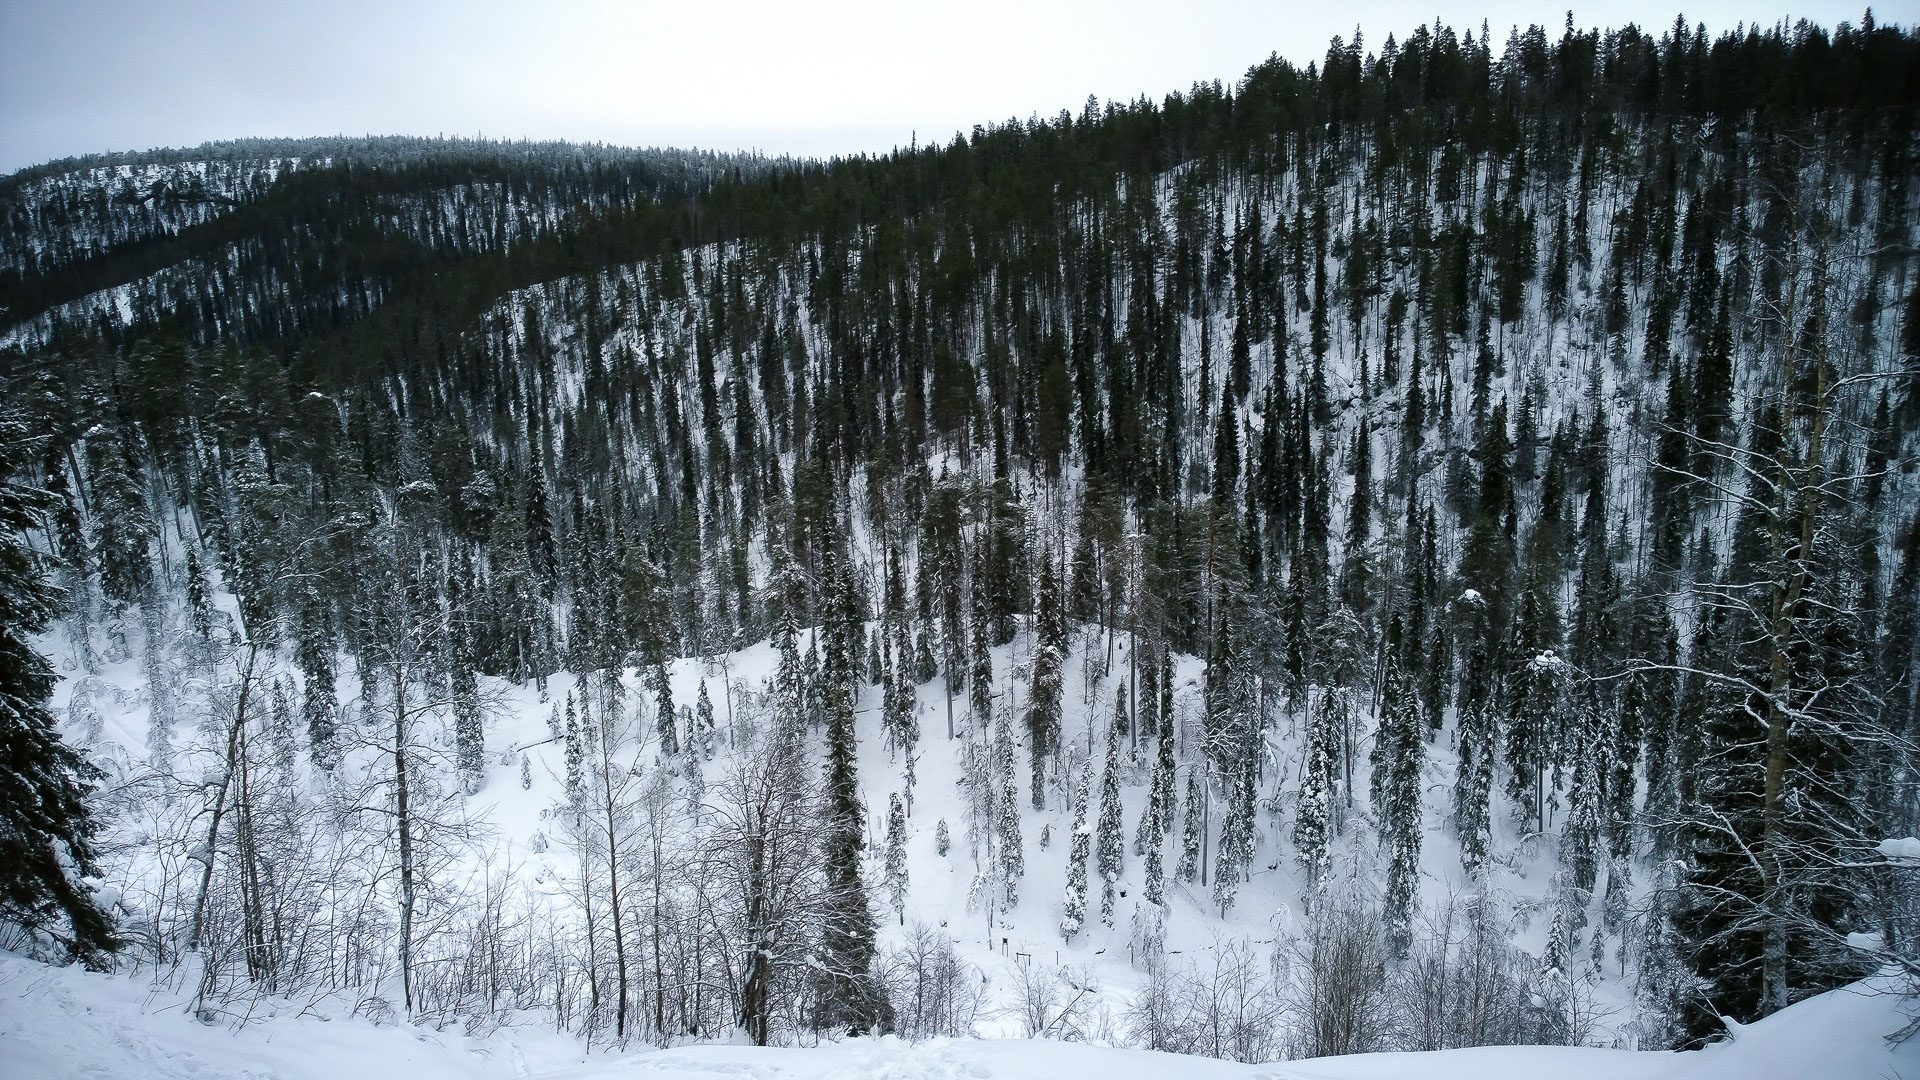 Visit to the Frozen Waterfalls of Korouoma National Park, Rovaniemi, Wild Nordic Finland @wildnordicfinland